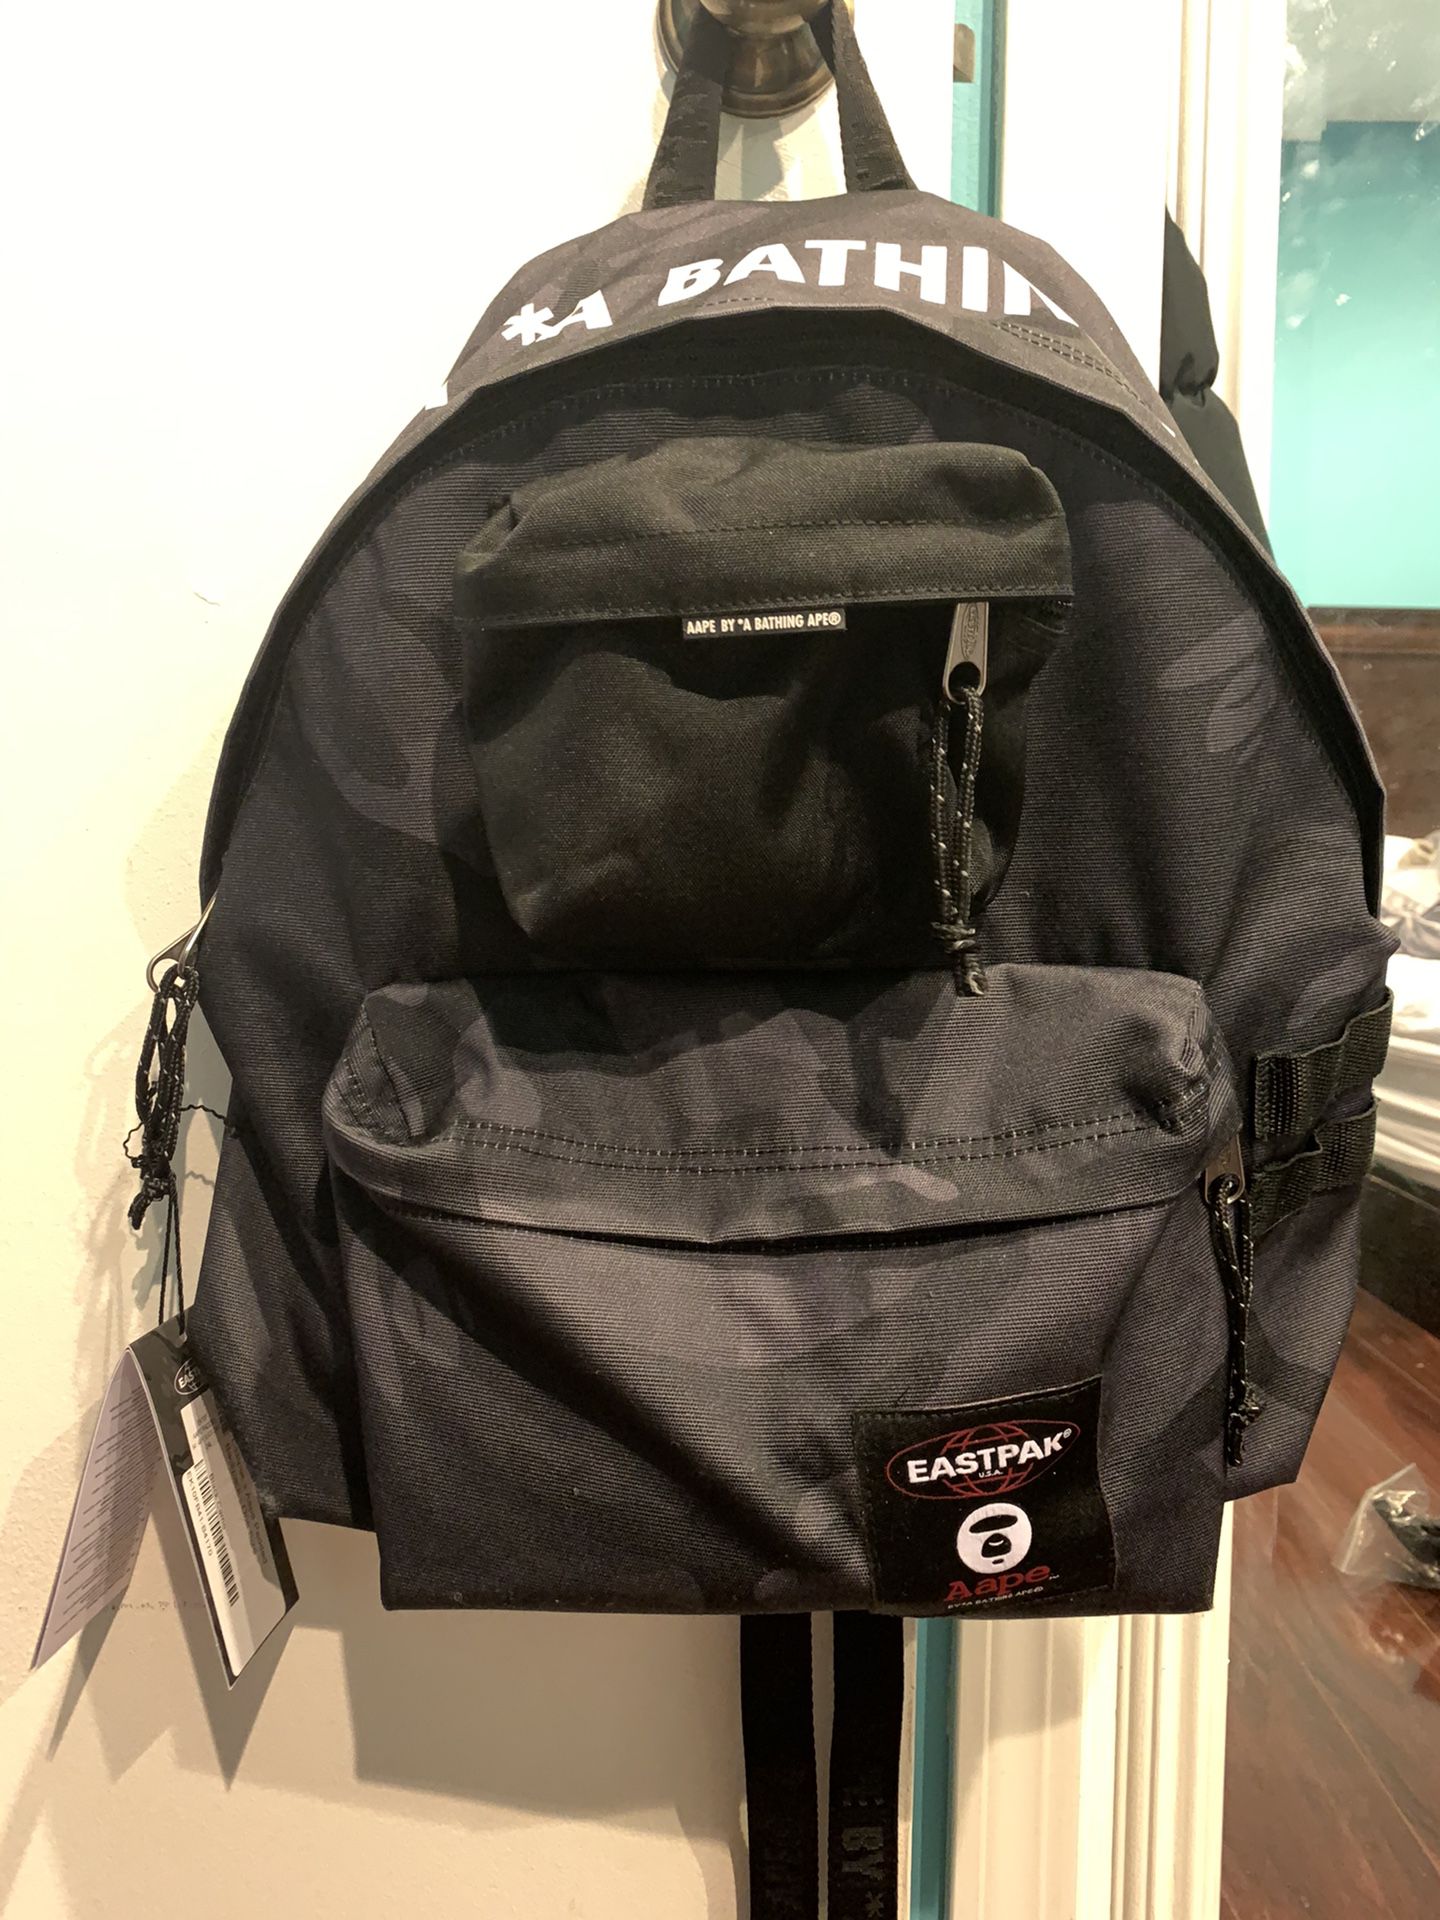 Bathing ape AAPE x Eastpack black camo backpack